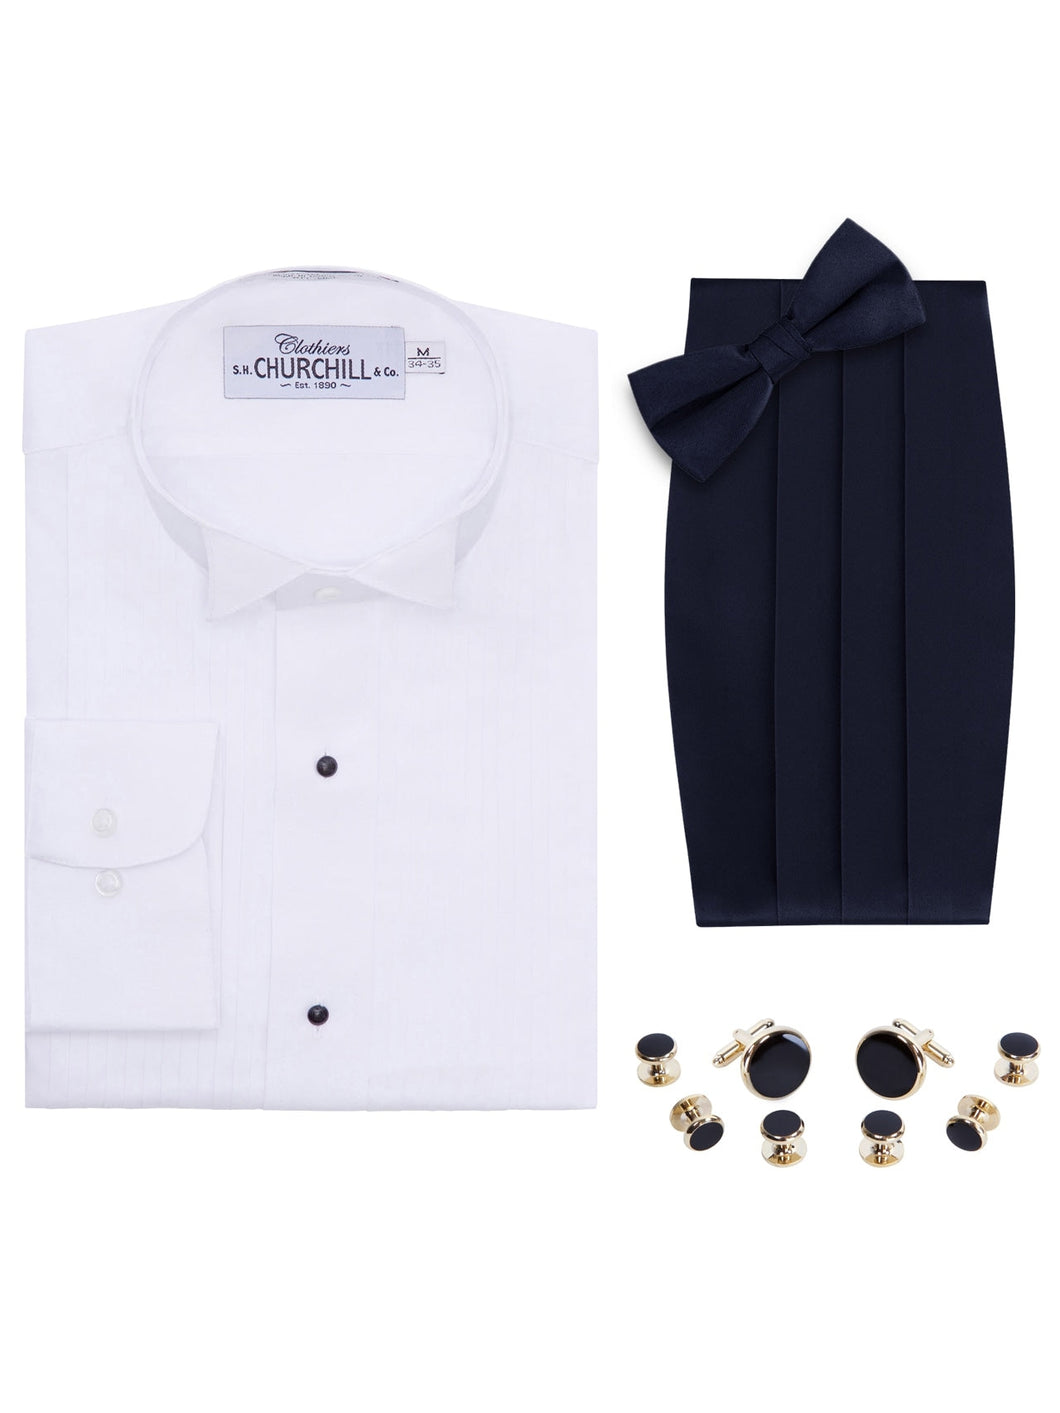 Wing Collar Tuxedo Shirt, Cummerbund, Bow Tie, Cufflink & Studs Set